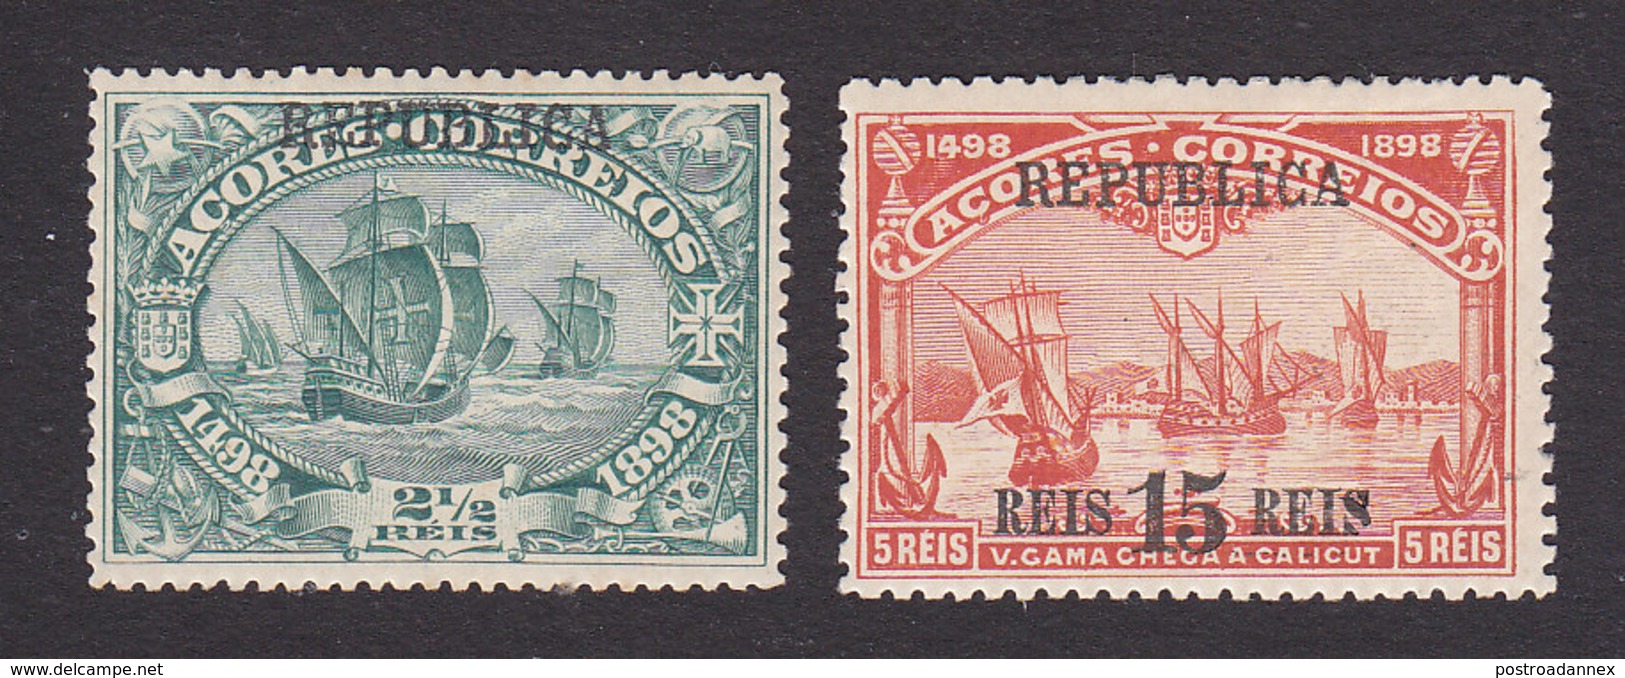 Azores, Scott #141-142, Mint Hinged, Vasco De Gama Overprinted, Issued 1911 - Azores